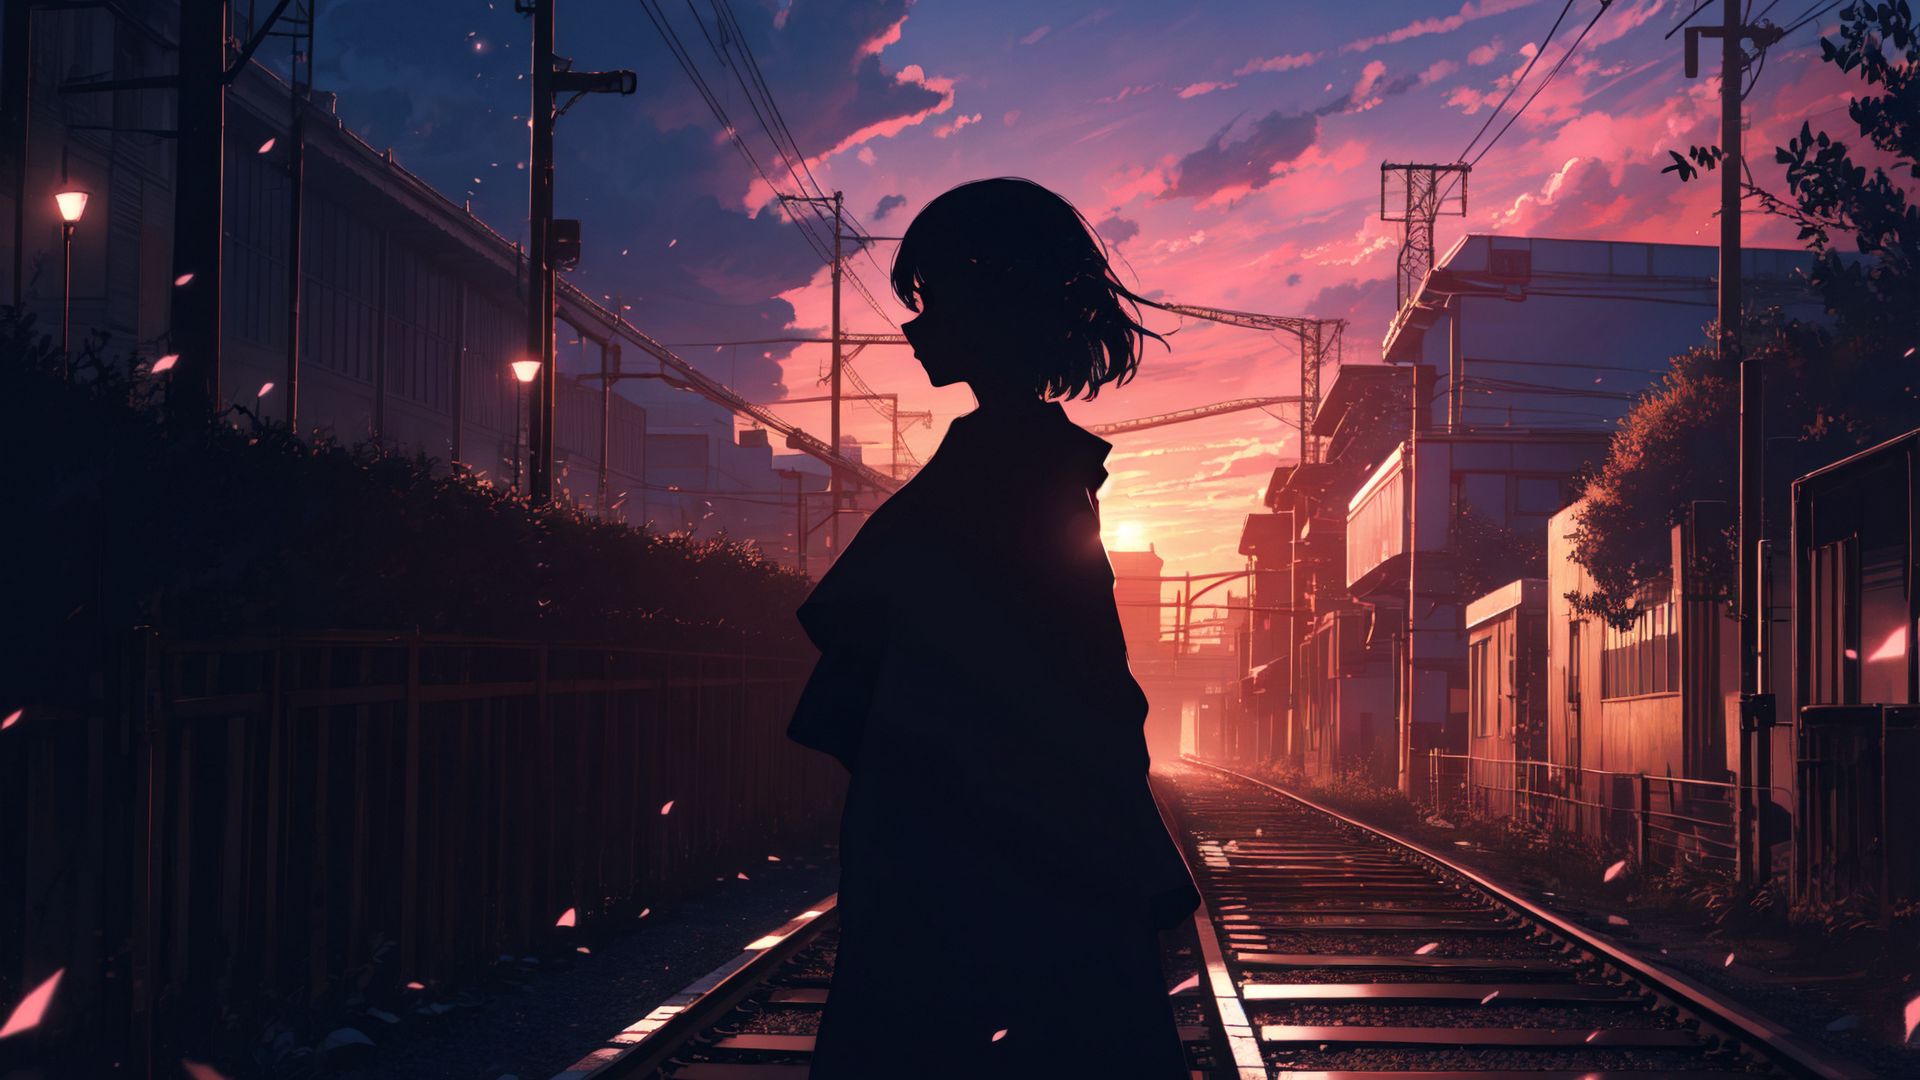 Download wallpaper 1920x1080 girl, silhouette, rails, anime full hd ...